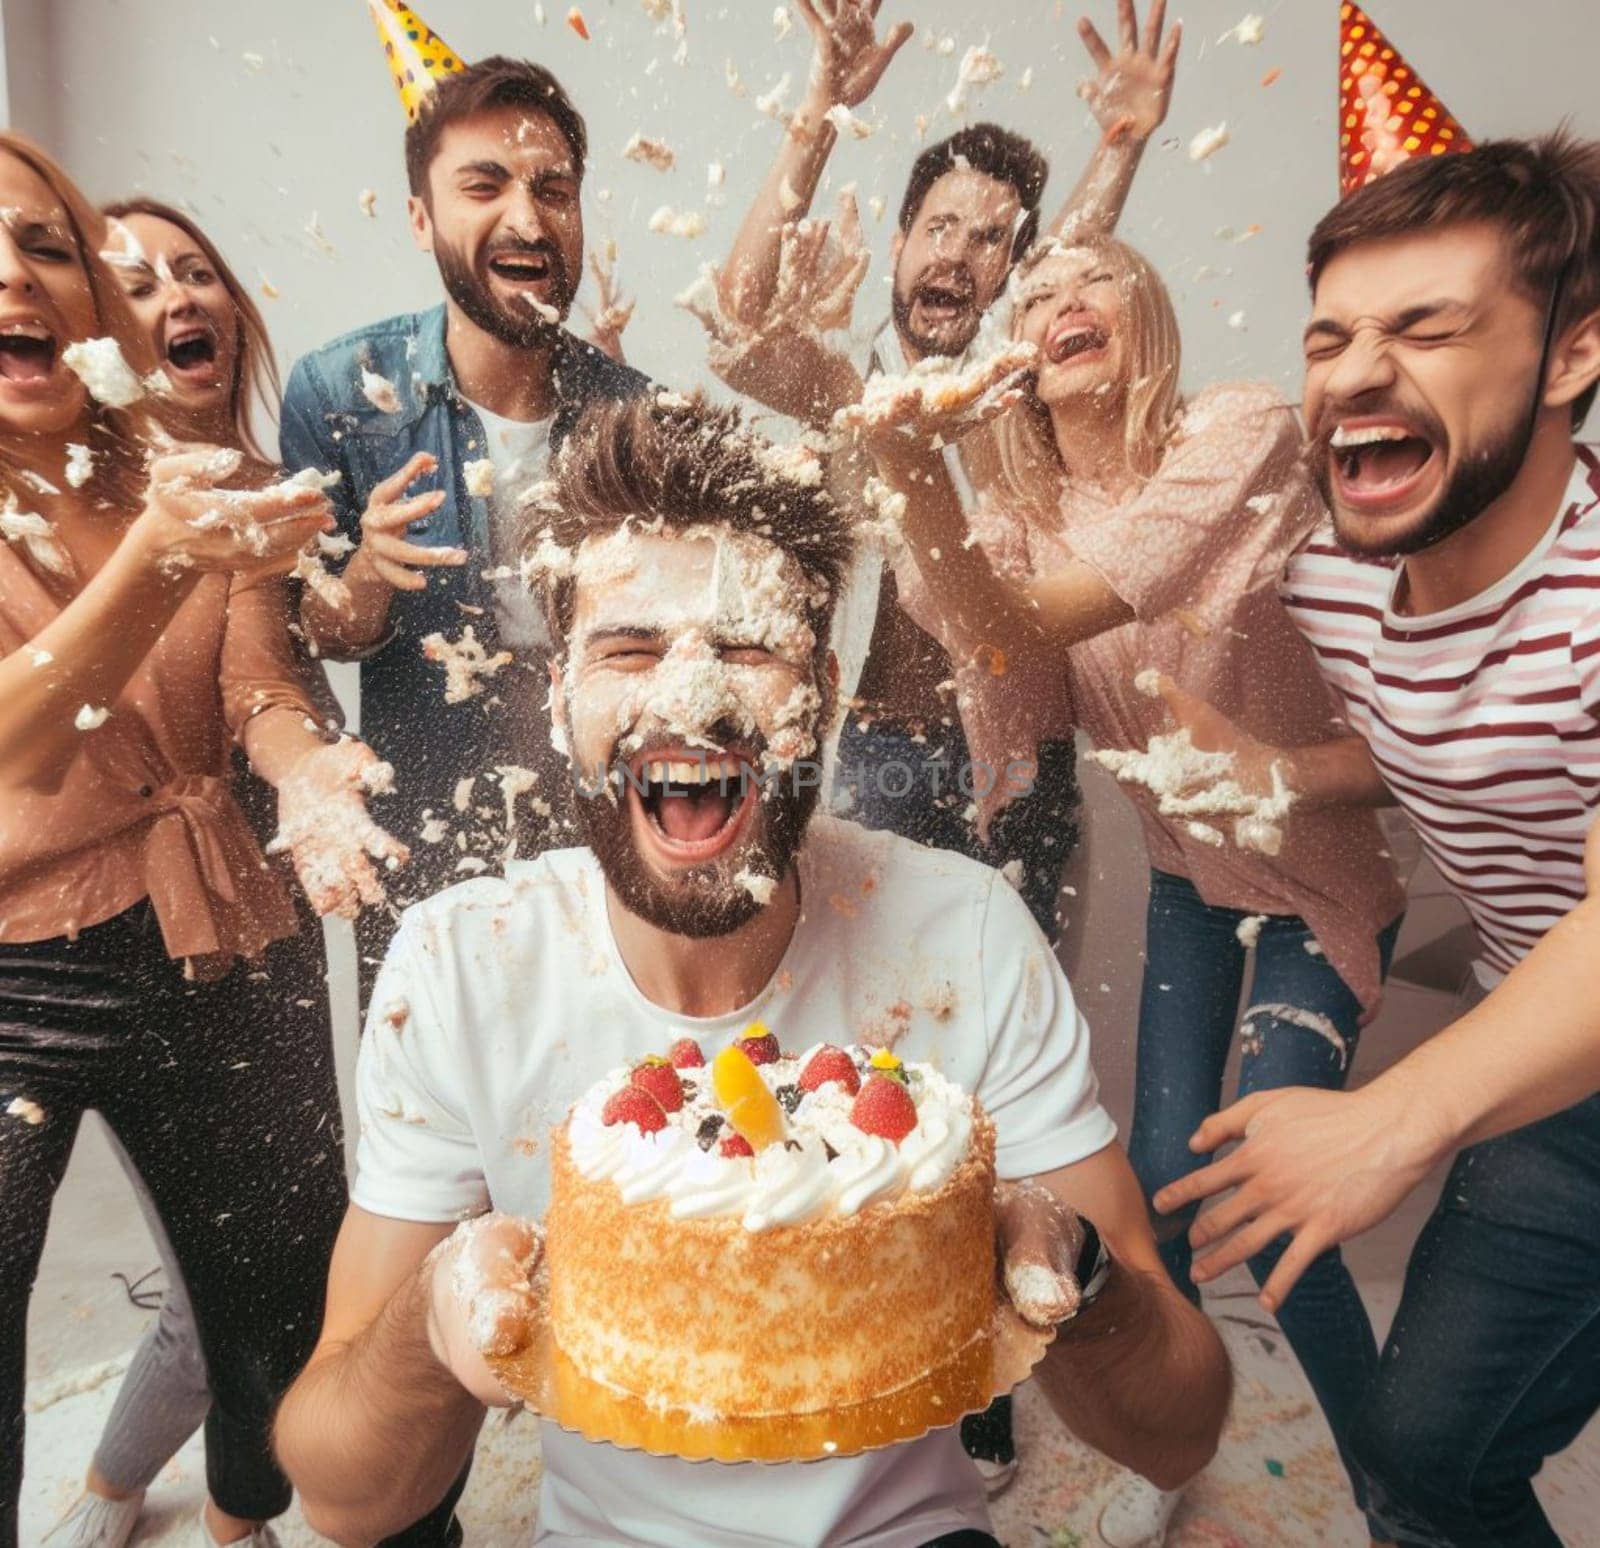 group elegant people celebrate toxic gala birthday at club throw cake splash wine wild party dance shout laugh art generated ai